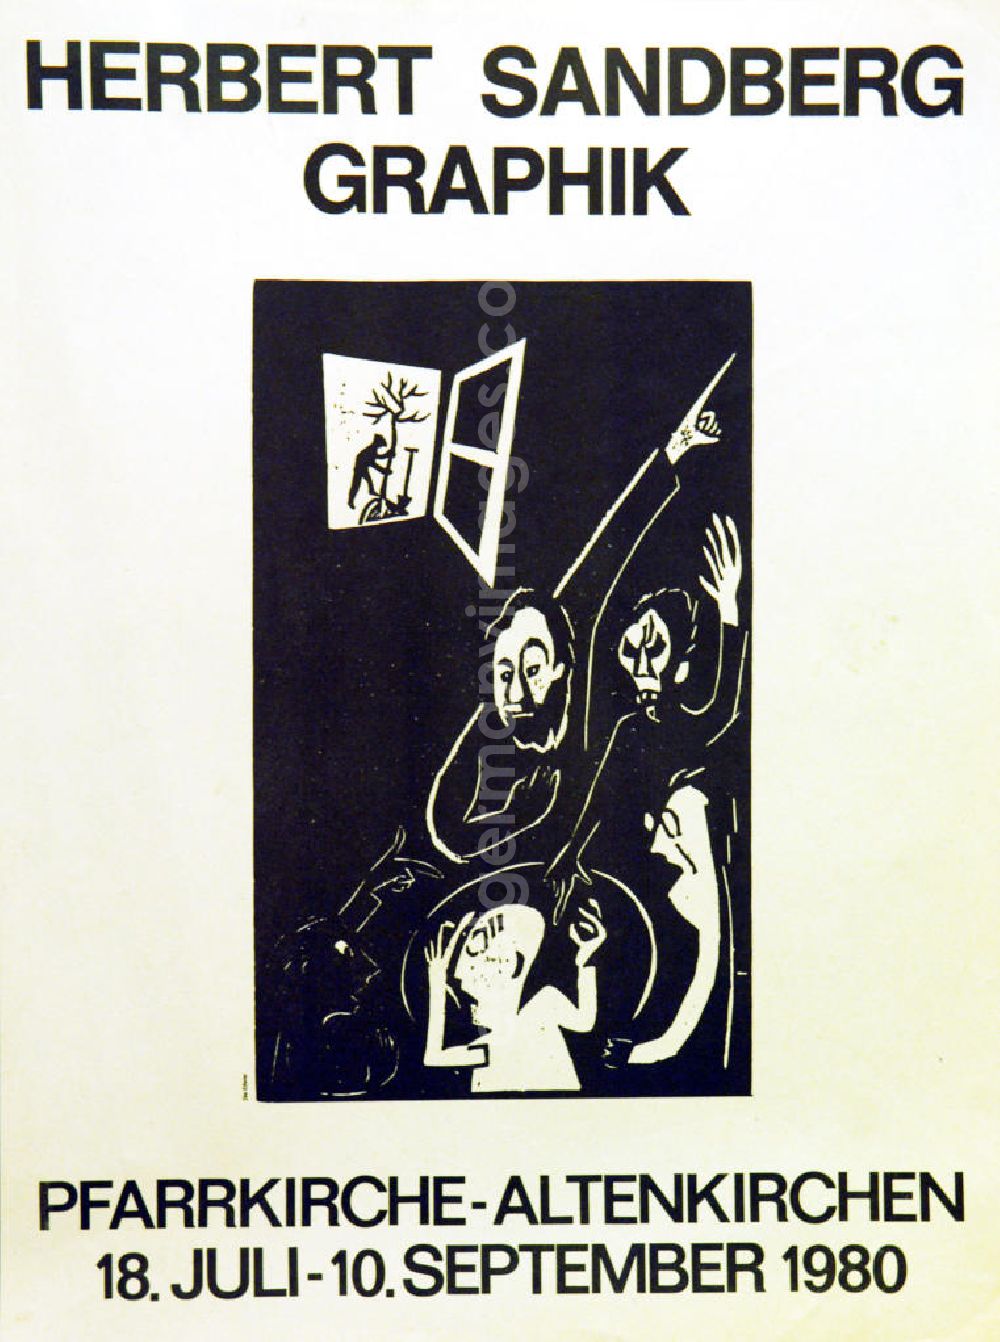 Berlin: Plakat der Ausstellung Herbert Sandberg Graphik vom 18.07.-10.09.1980 Pfarrkirche-Altenkirchen, 35,